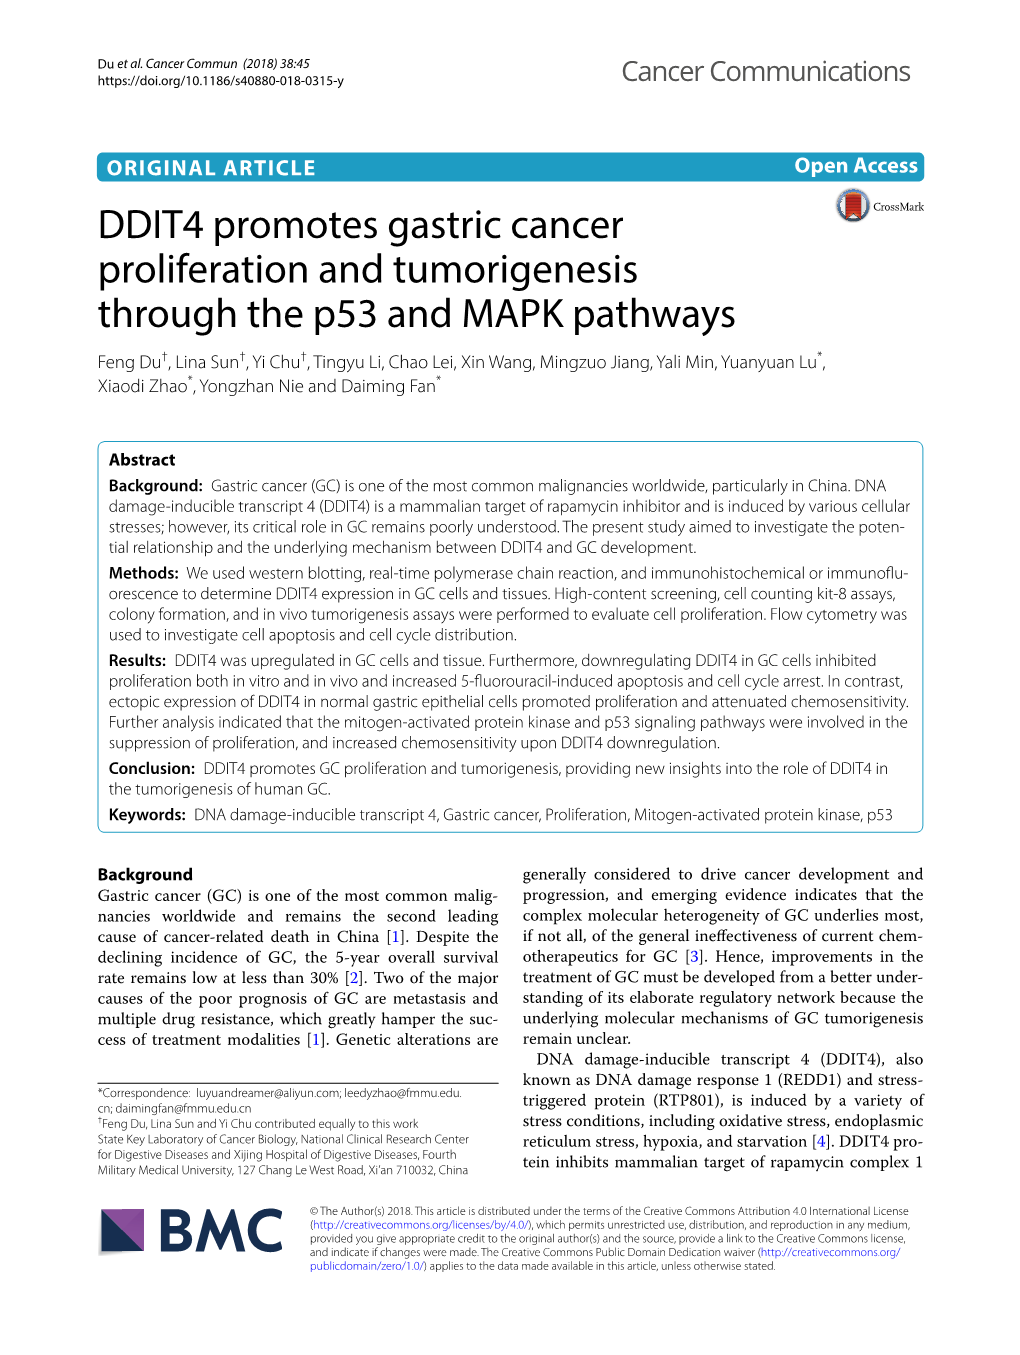 DDIT4 Promotes Gastric Cancer Proliferation and Tumorigenesis